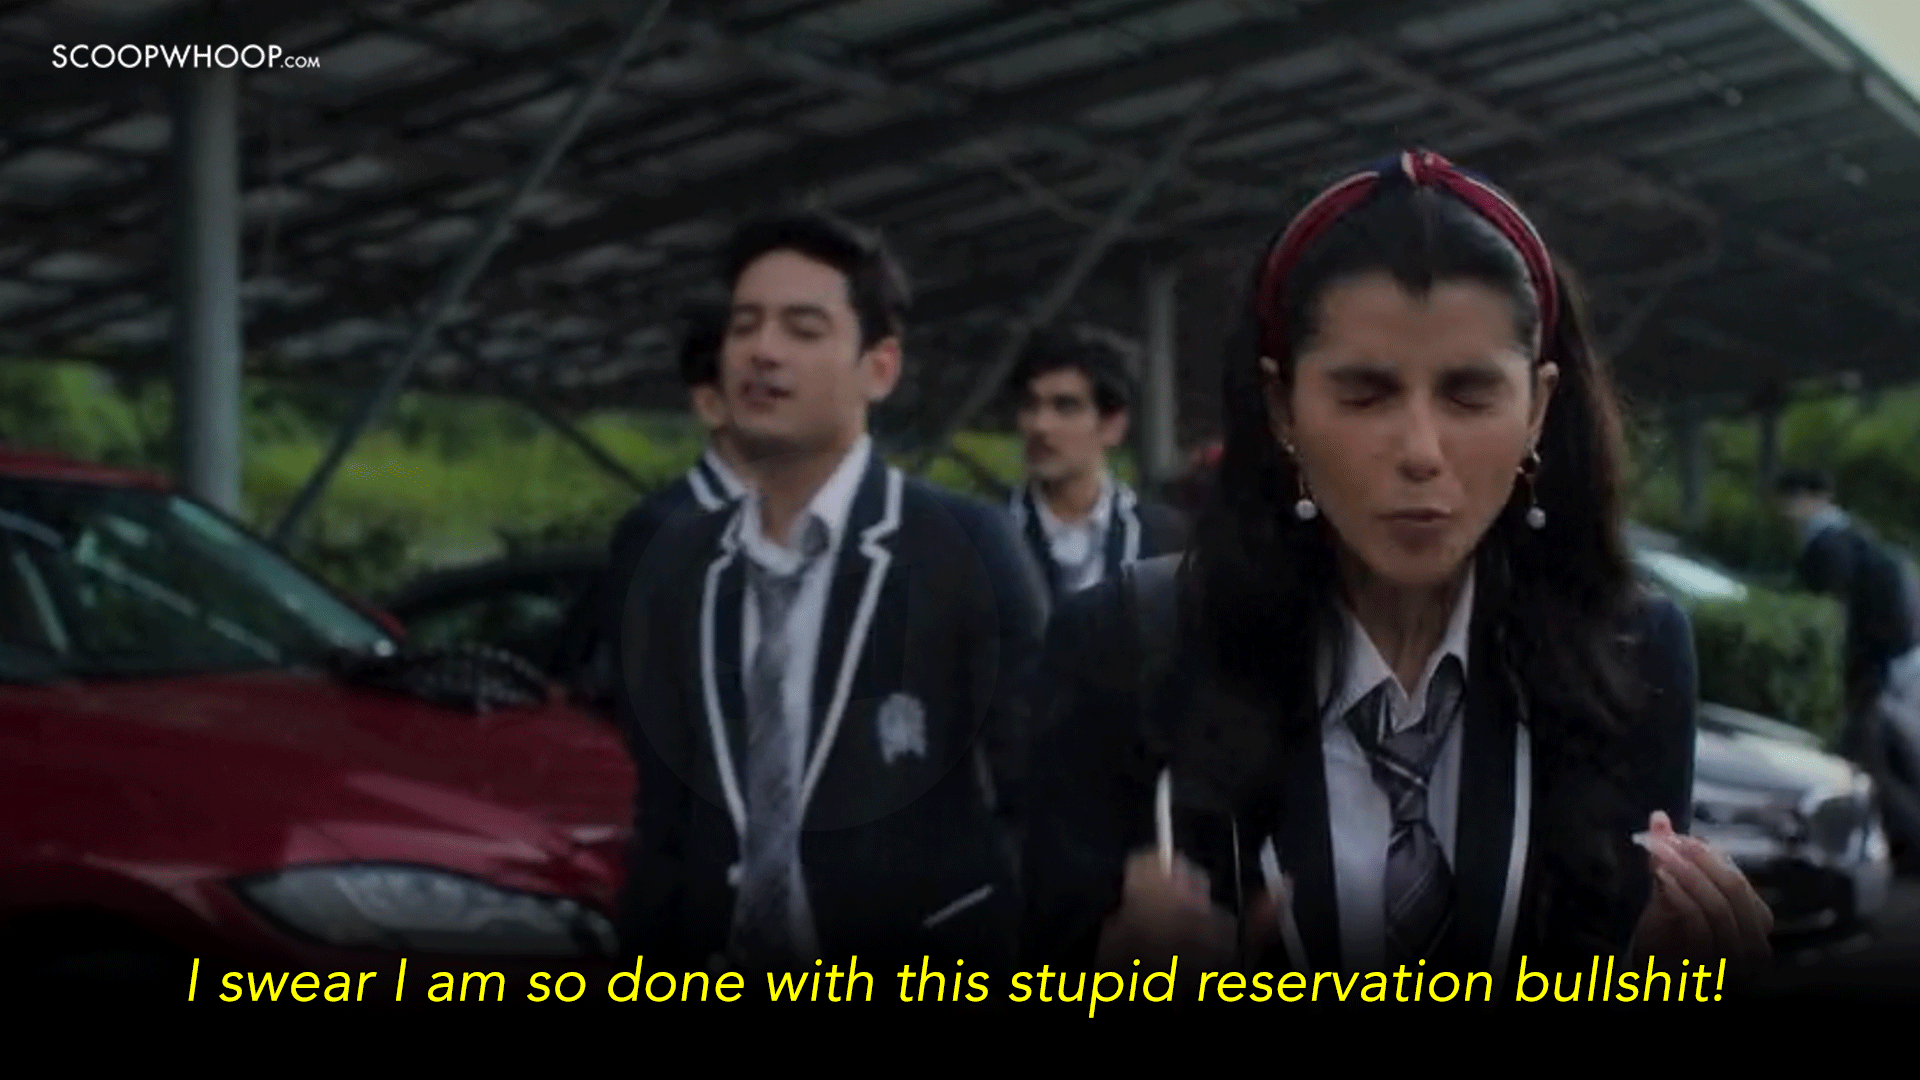 general student's tone-deaf POV of reservation system